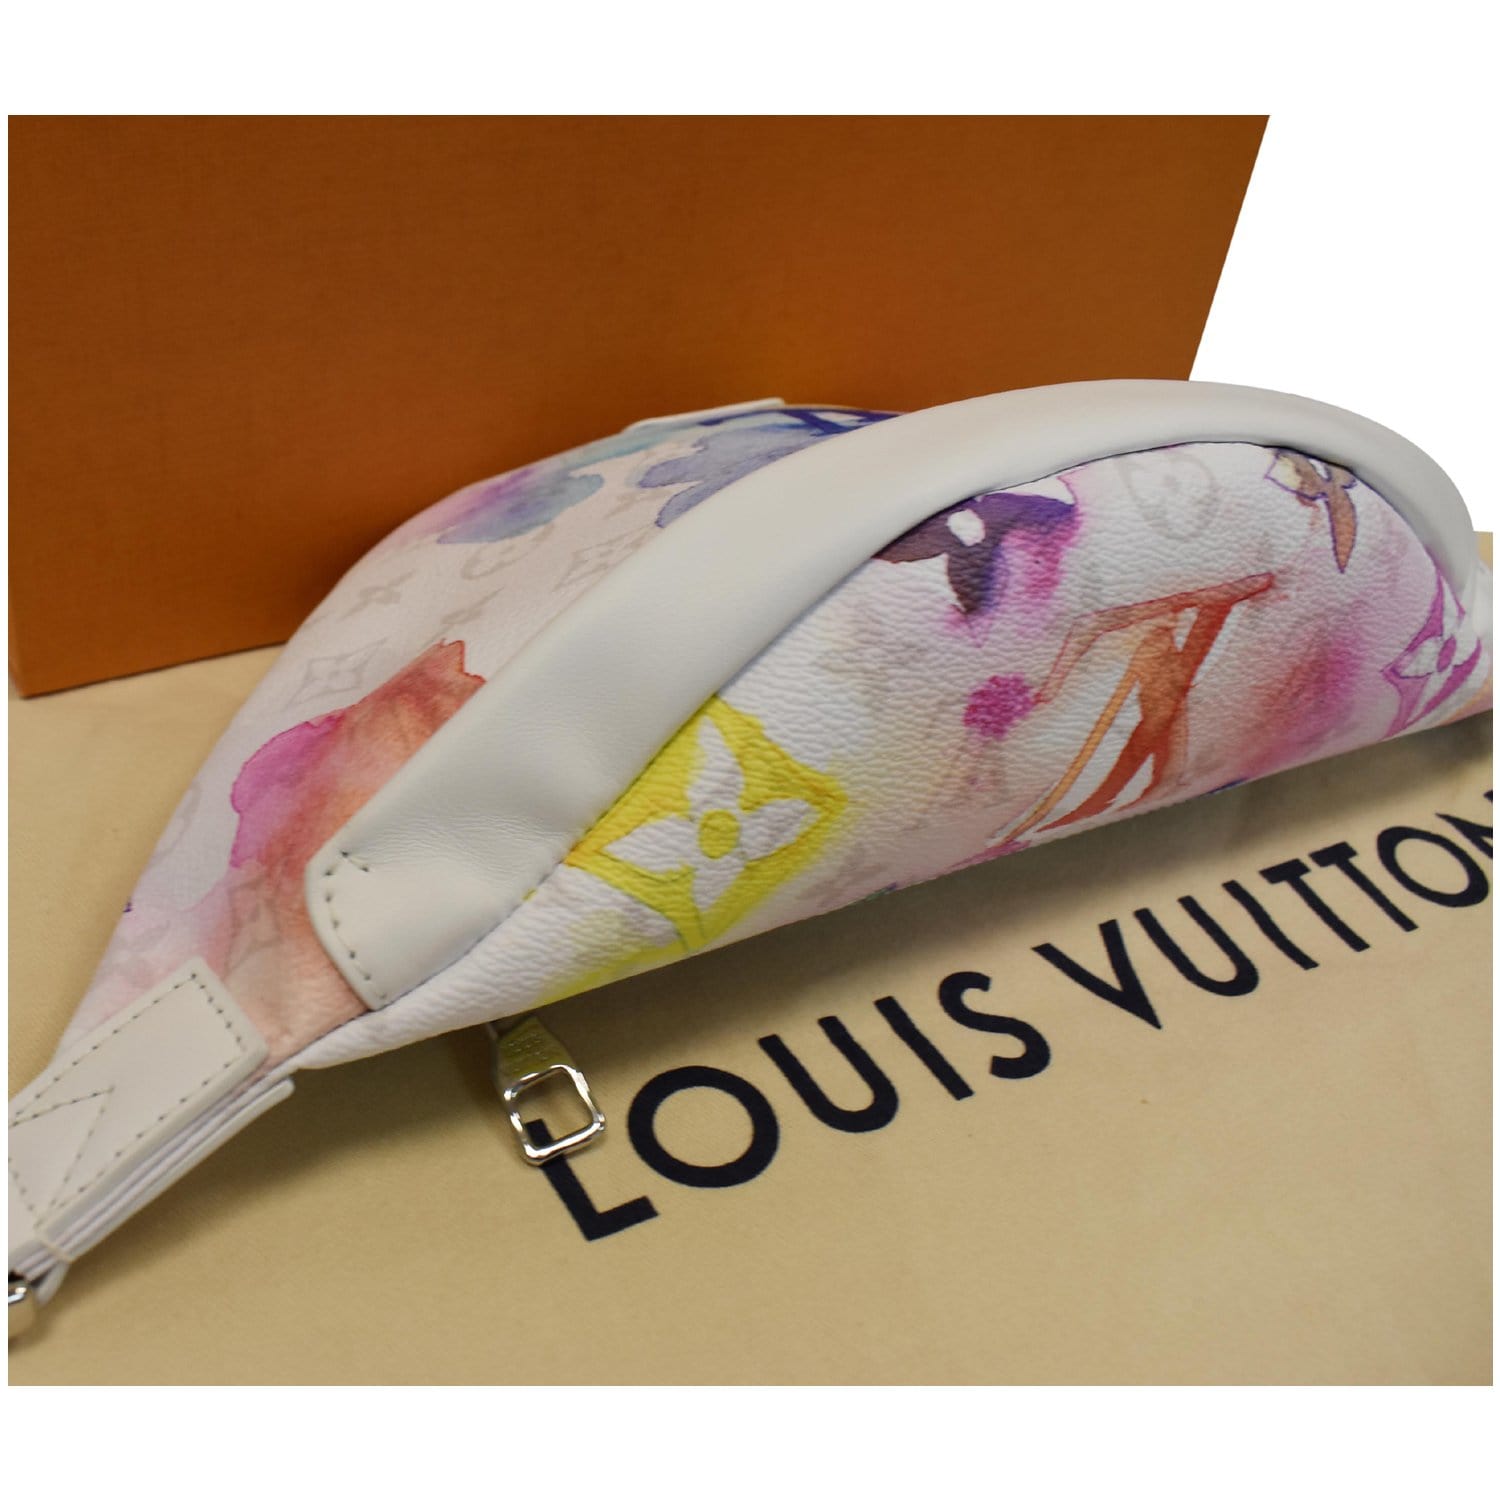 Louis Vuitton Summer 2021 'Watercolor' Capsule Collection